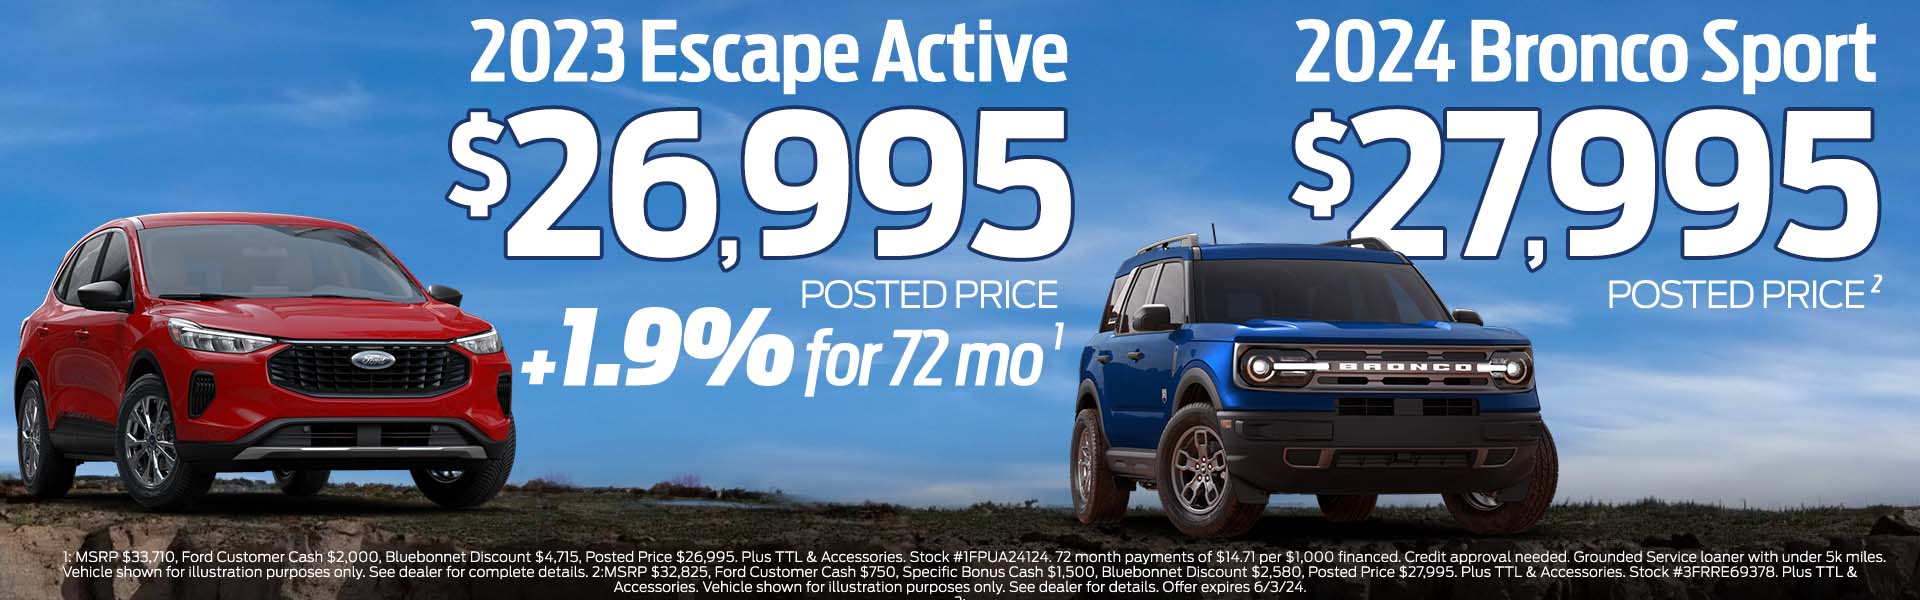 2024 Bronco Sport $27,995 | 2023 Escape $25,995 + 1.9% APR